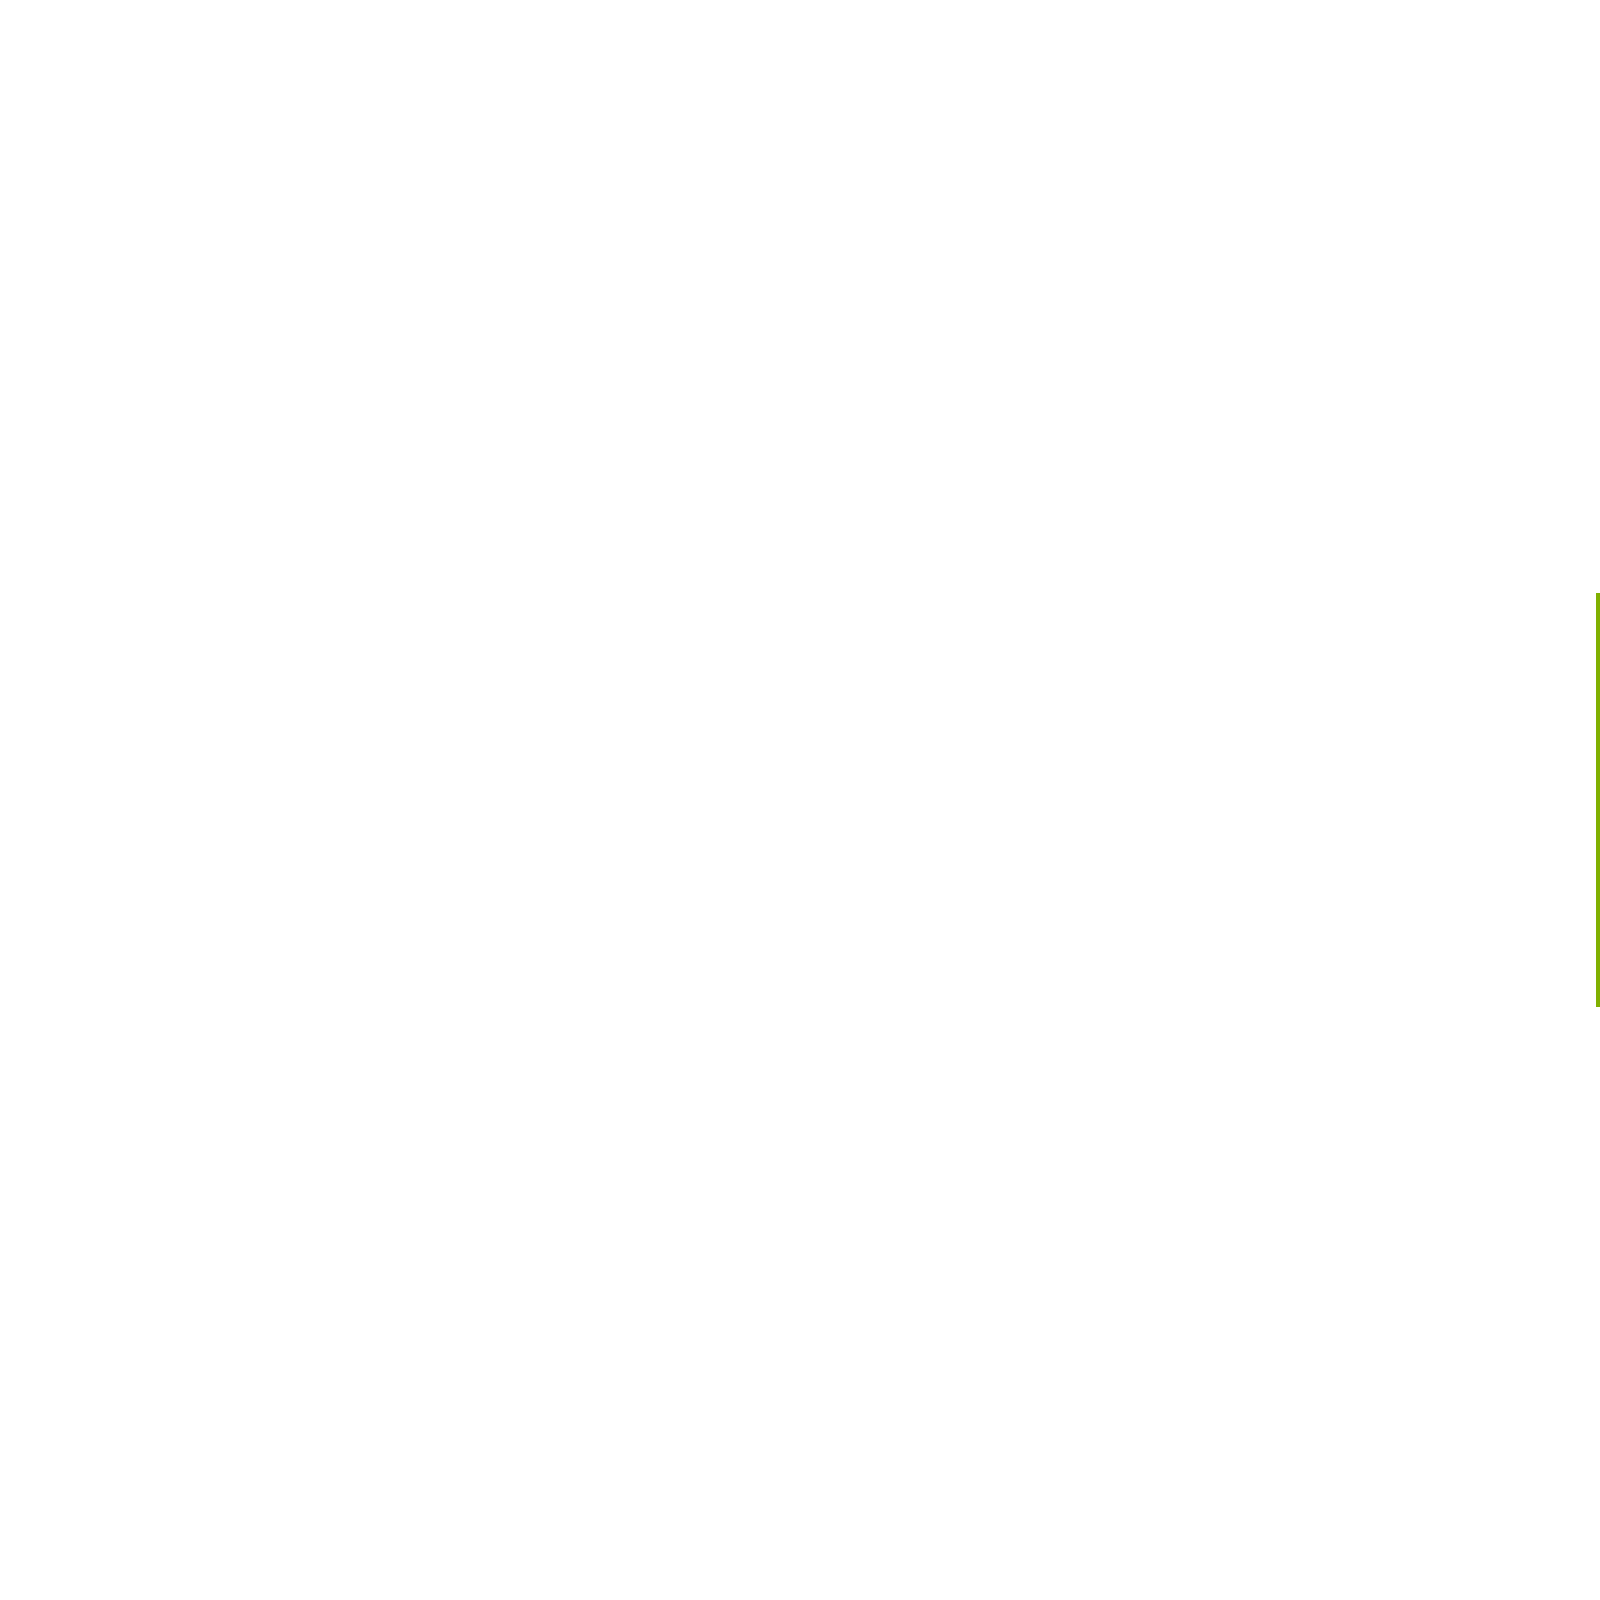 Internal Revenue Service Challenge Coin IRS Challenge Coin